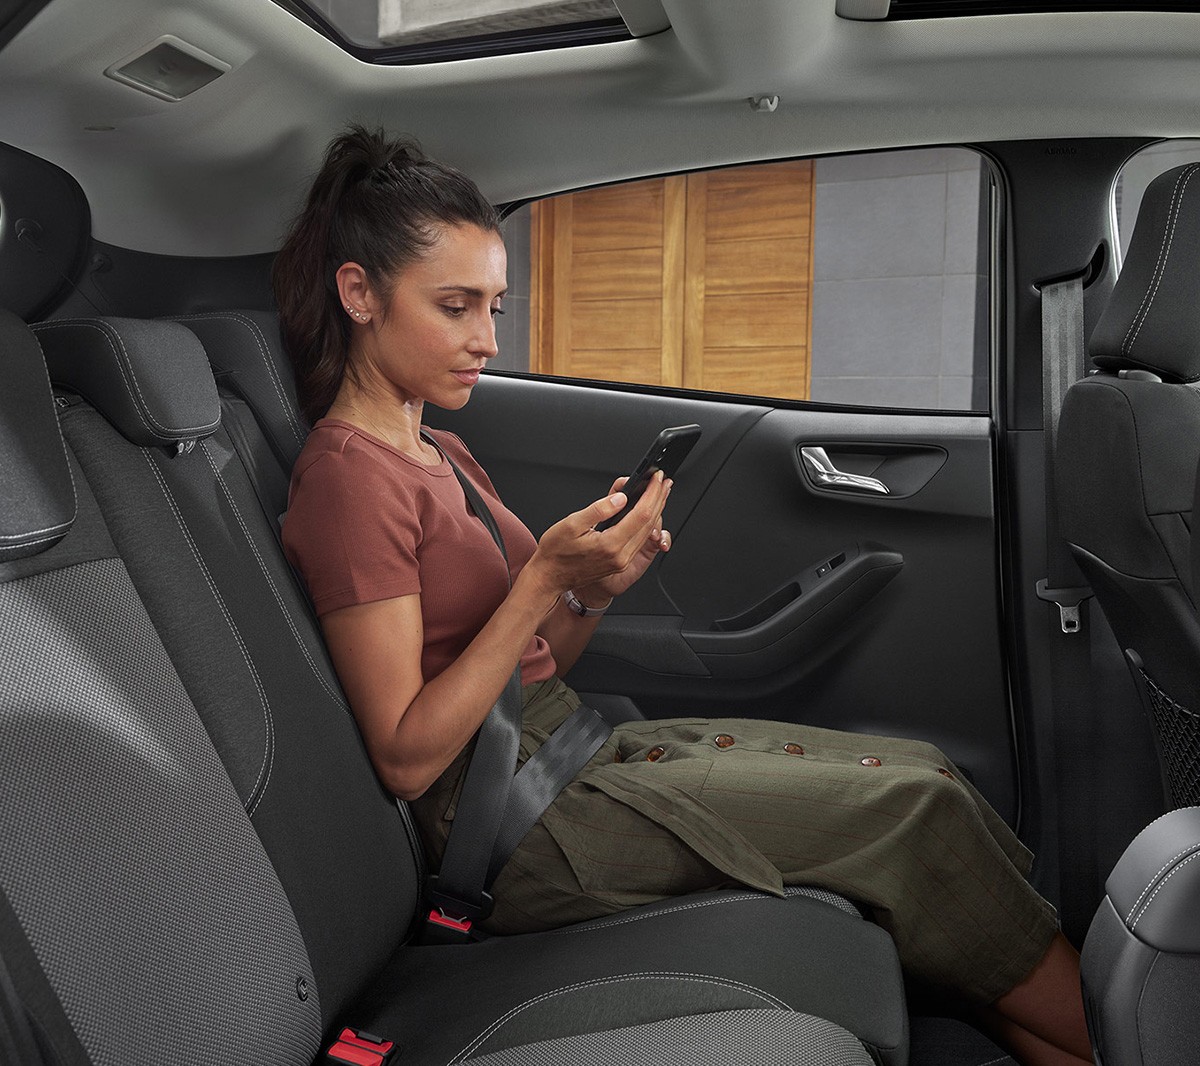 Ford Puma interior view of rear passenger seats